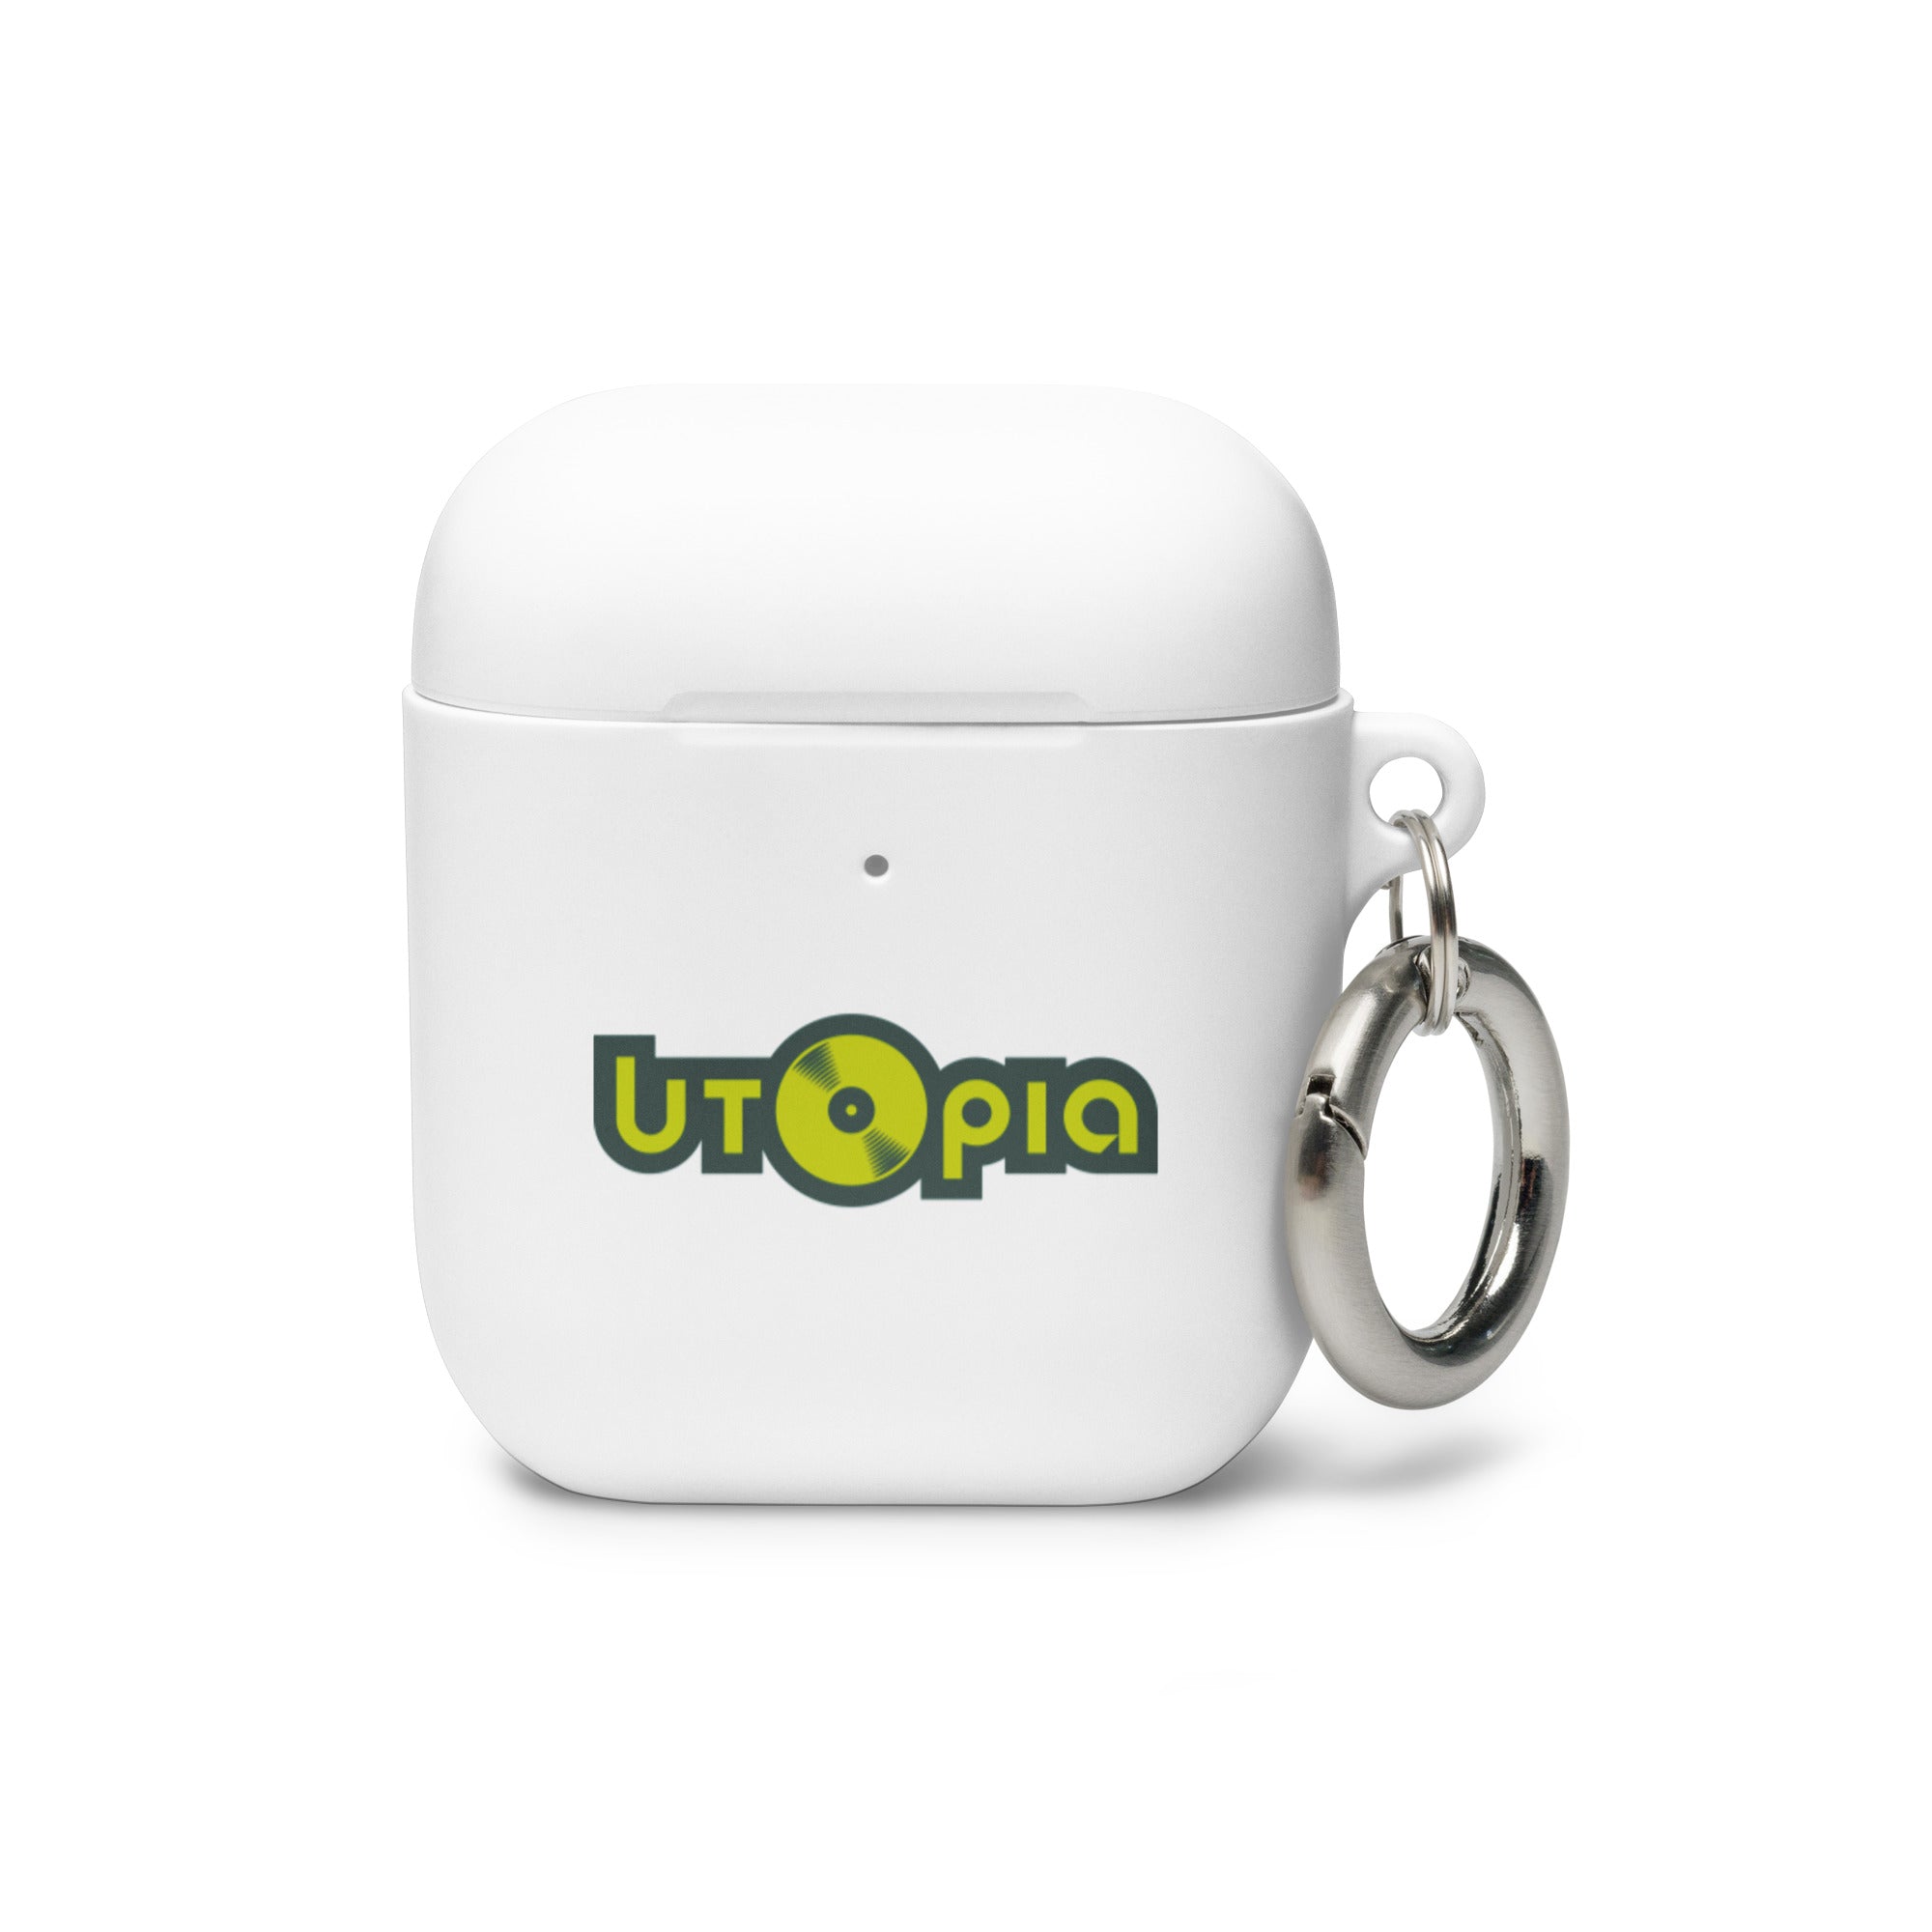 Utopia: AirPods® Case Cover